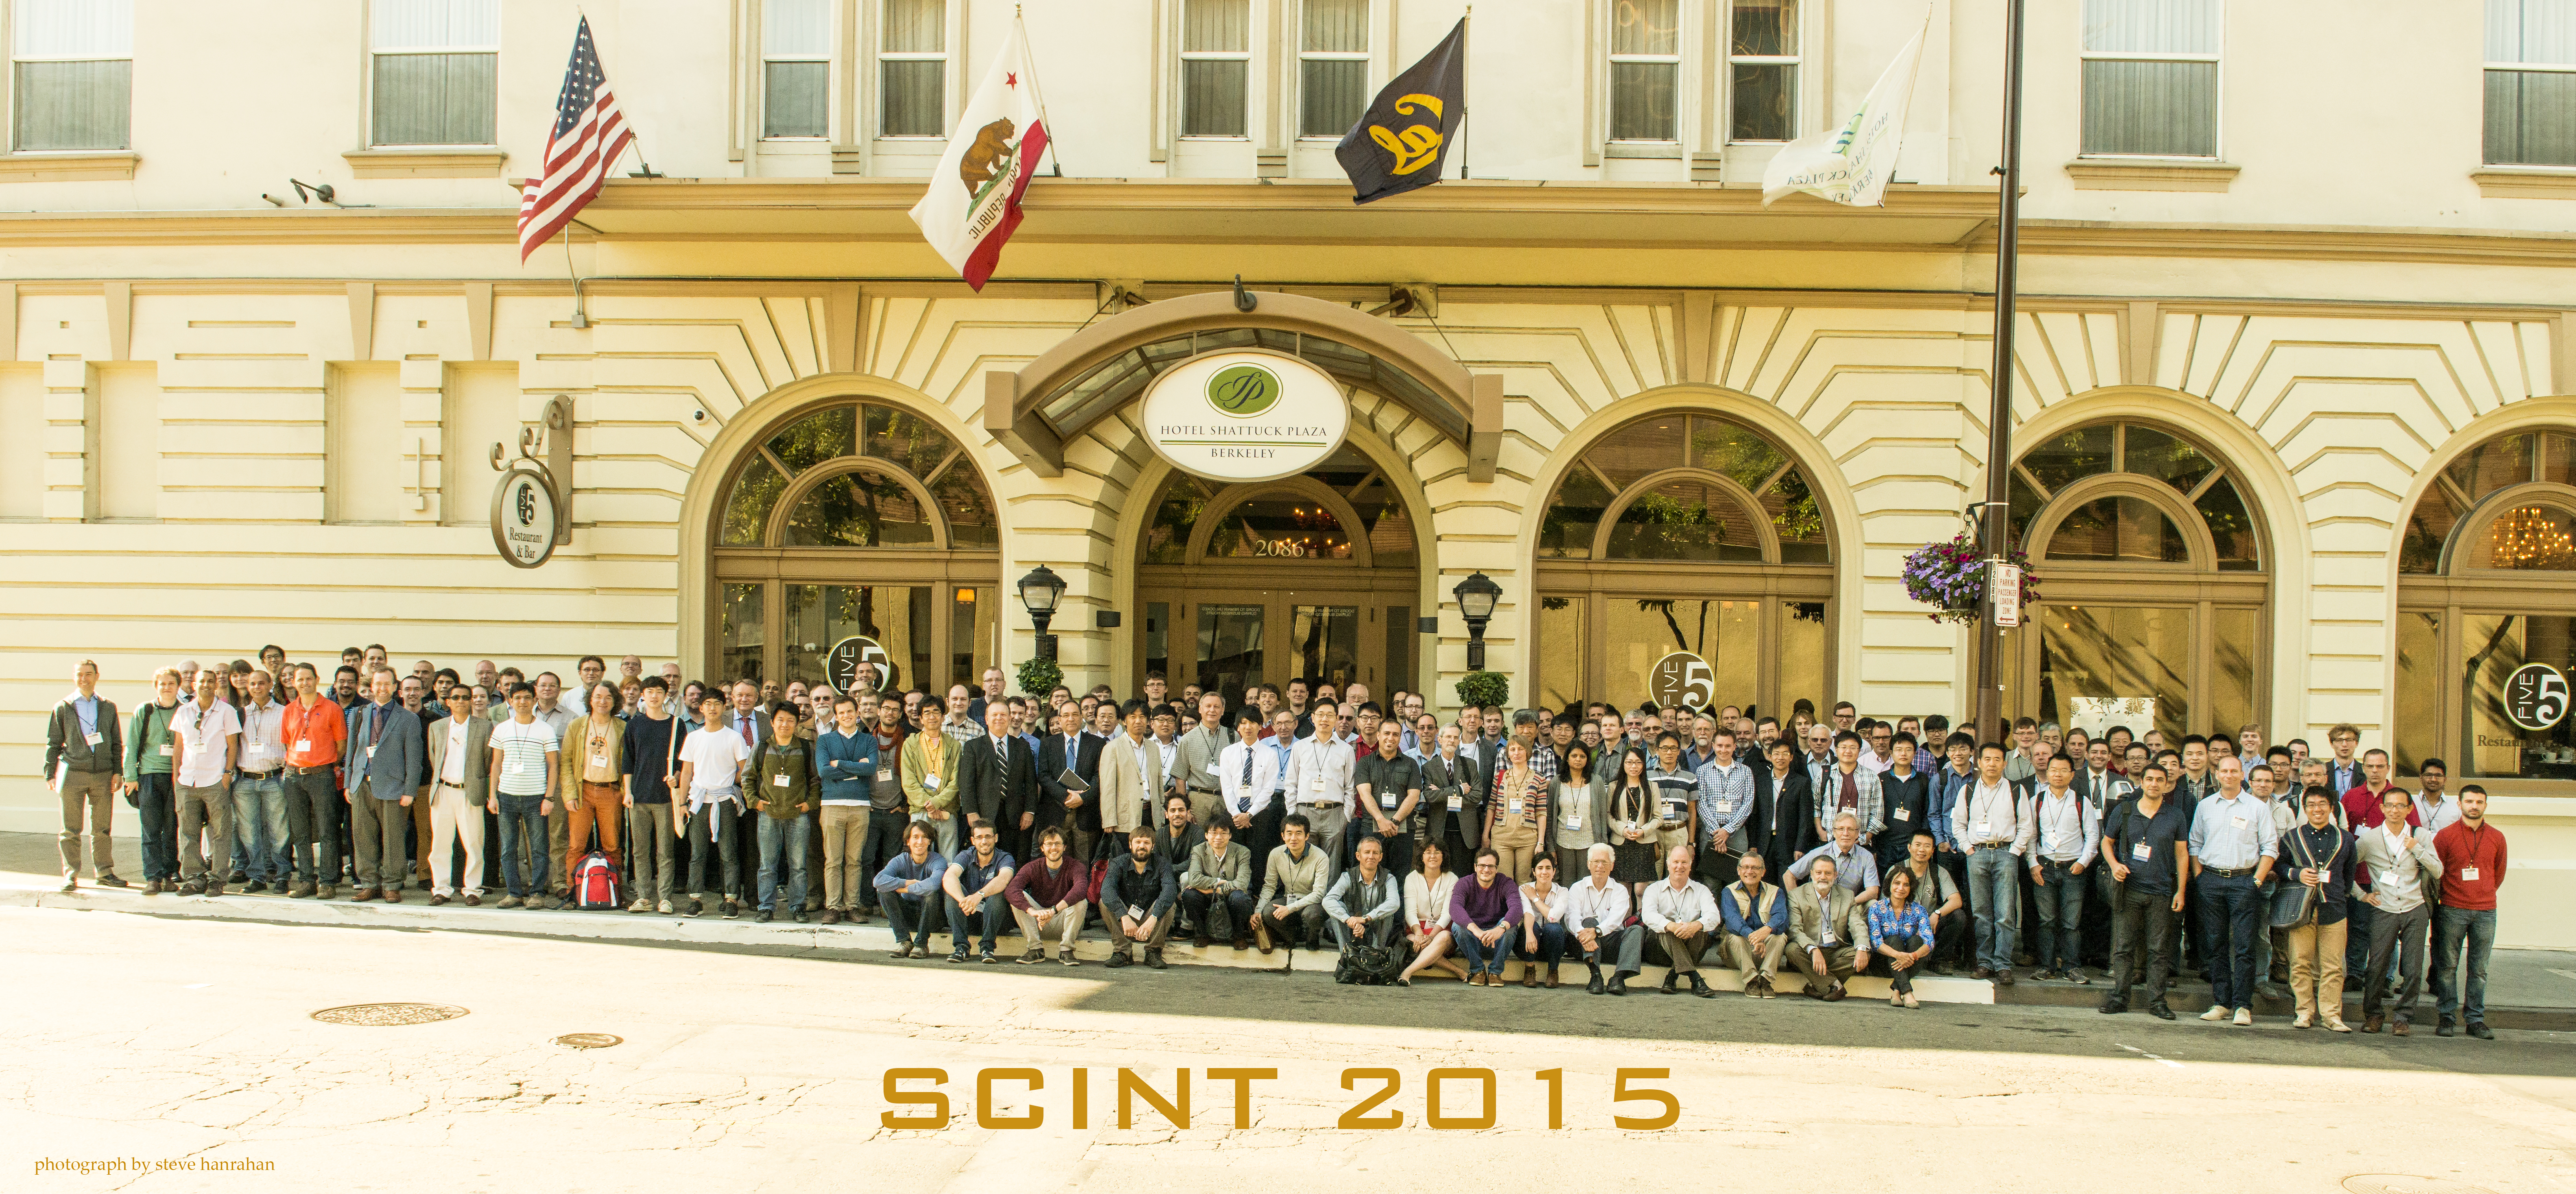 Scint-2015-Photo.jpg